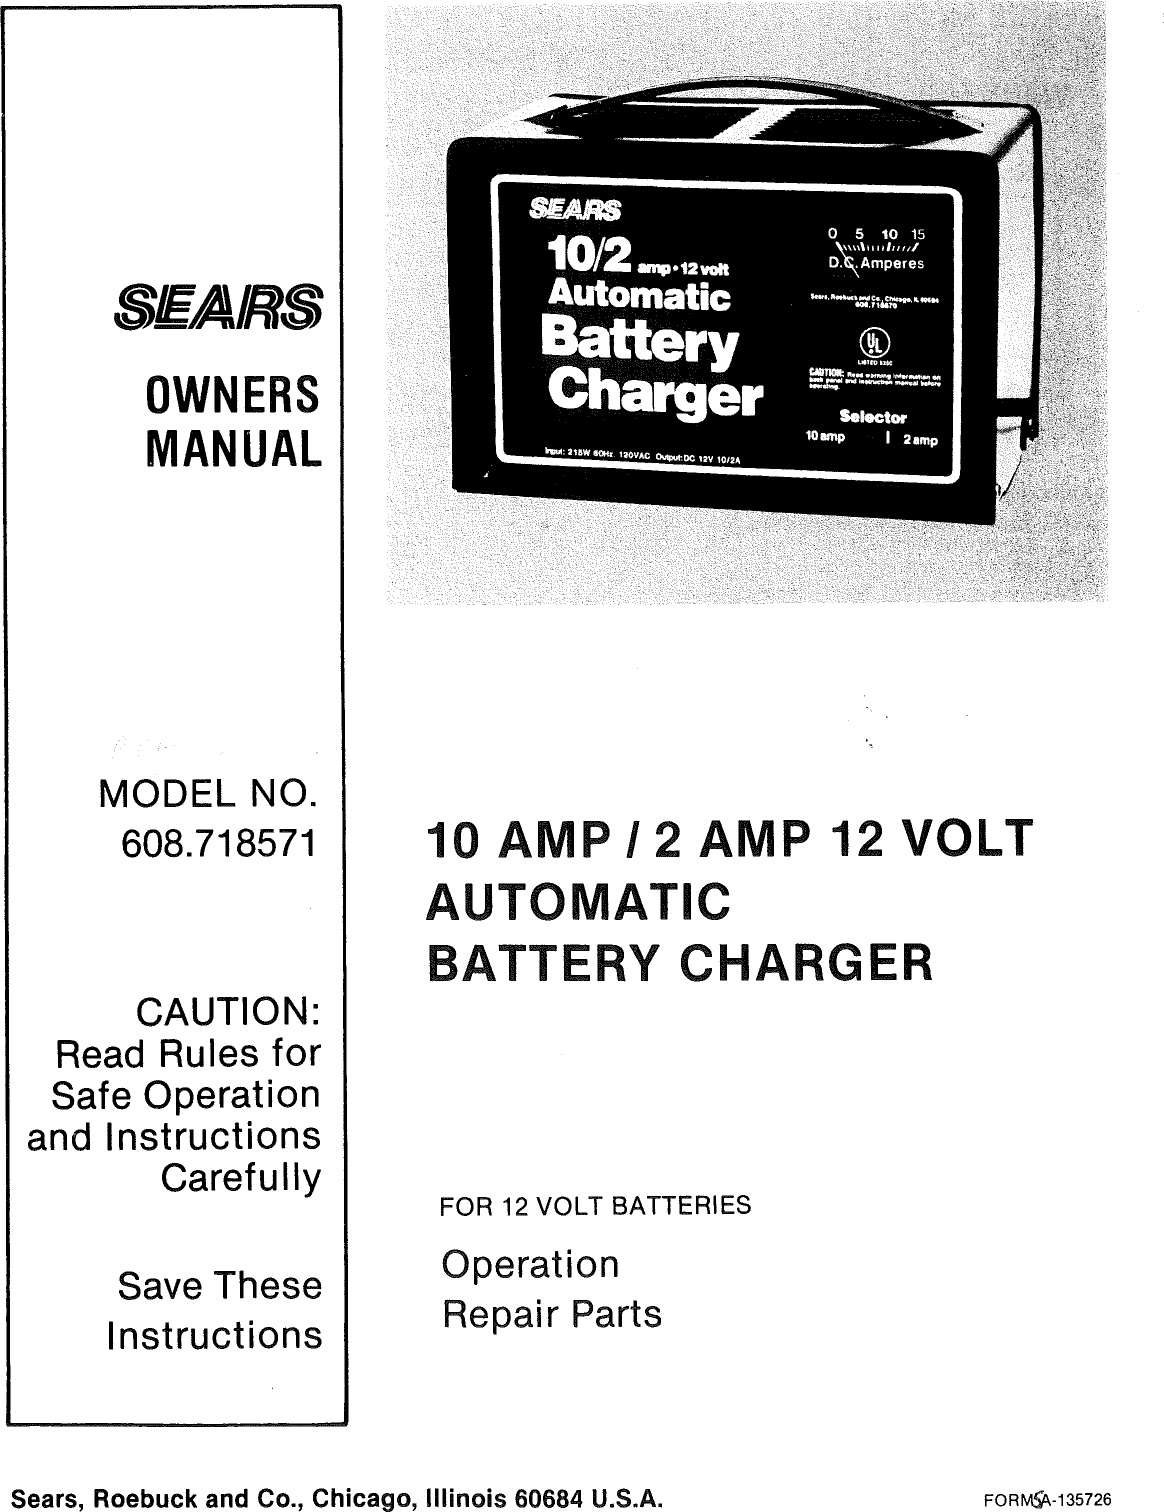 Page 1 of 6 - Sears Sears-608-718571-Users-Manual-  Sears-608-718571-users-manual